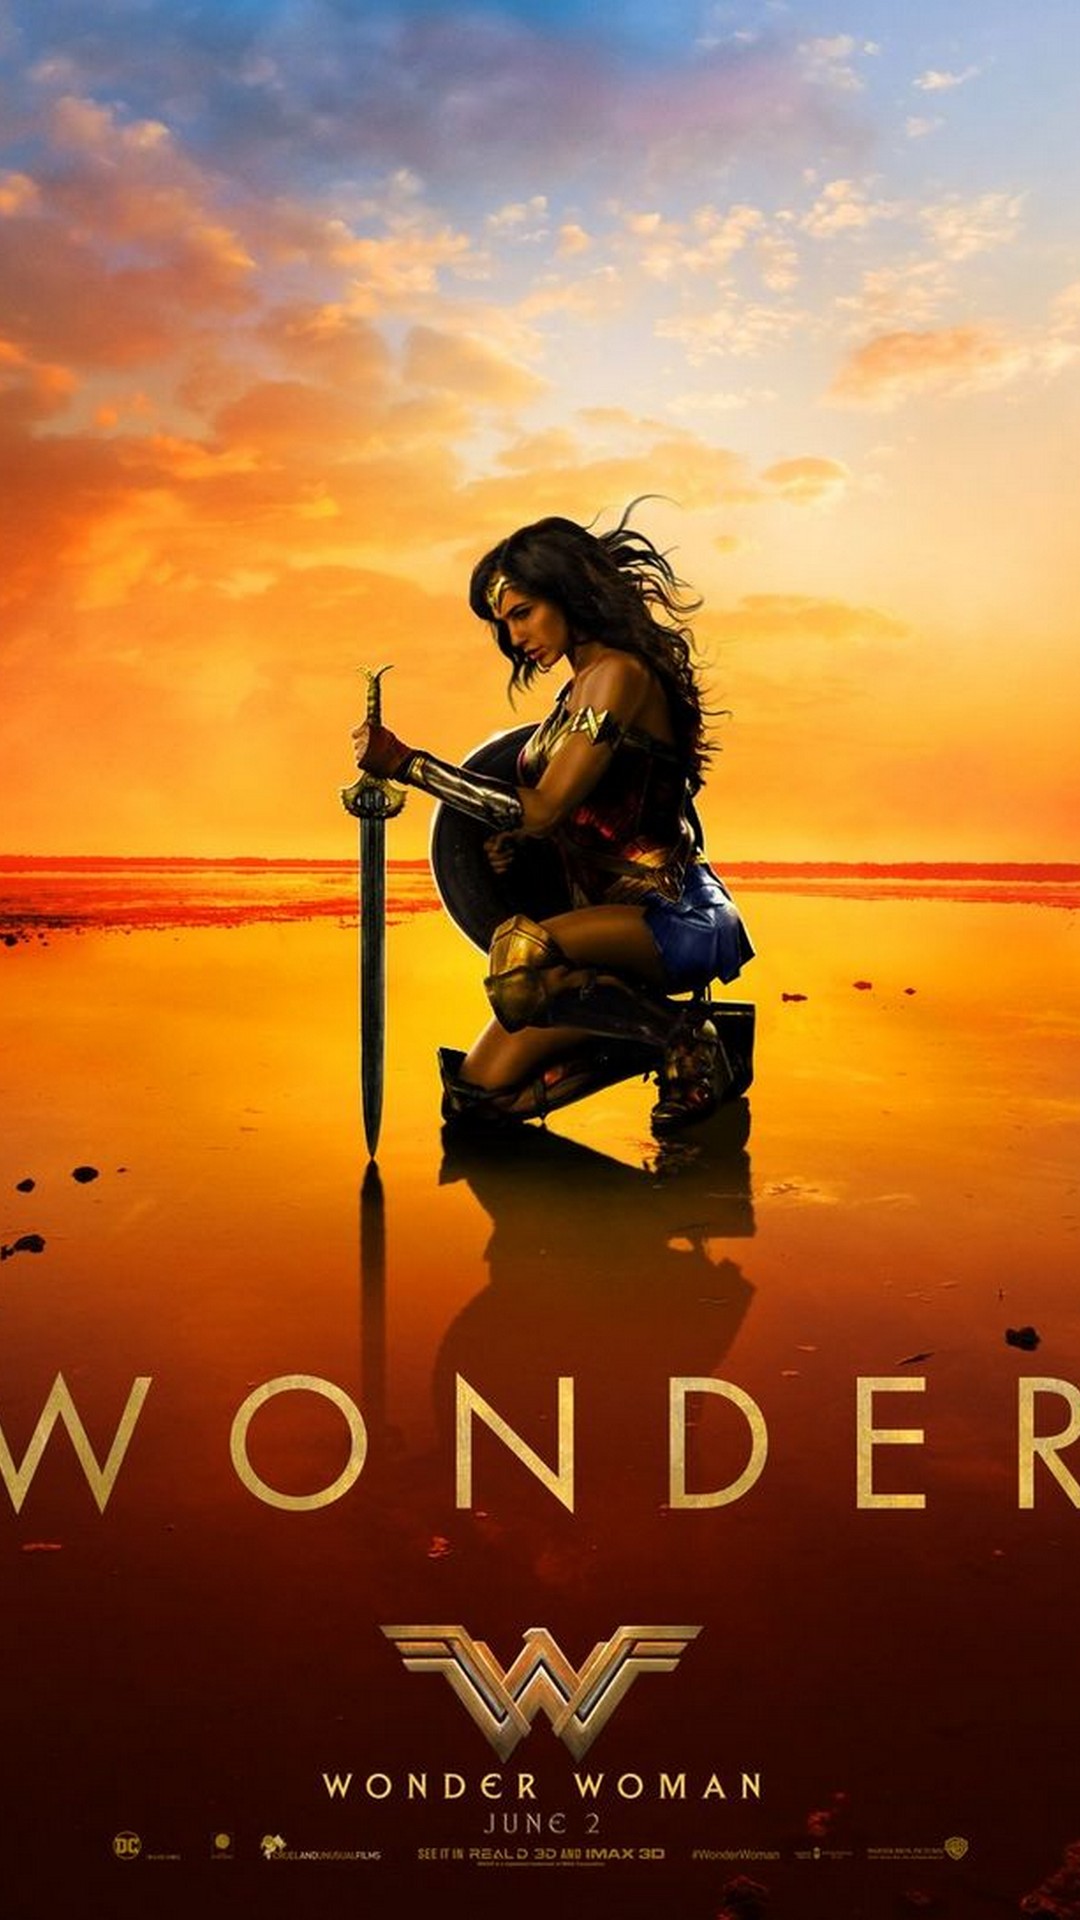 Wonder Woman Movie iPhone Wallpaper resolution 1080x1920